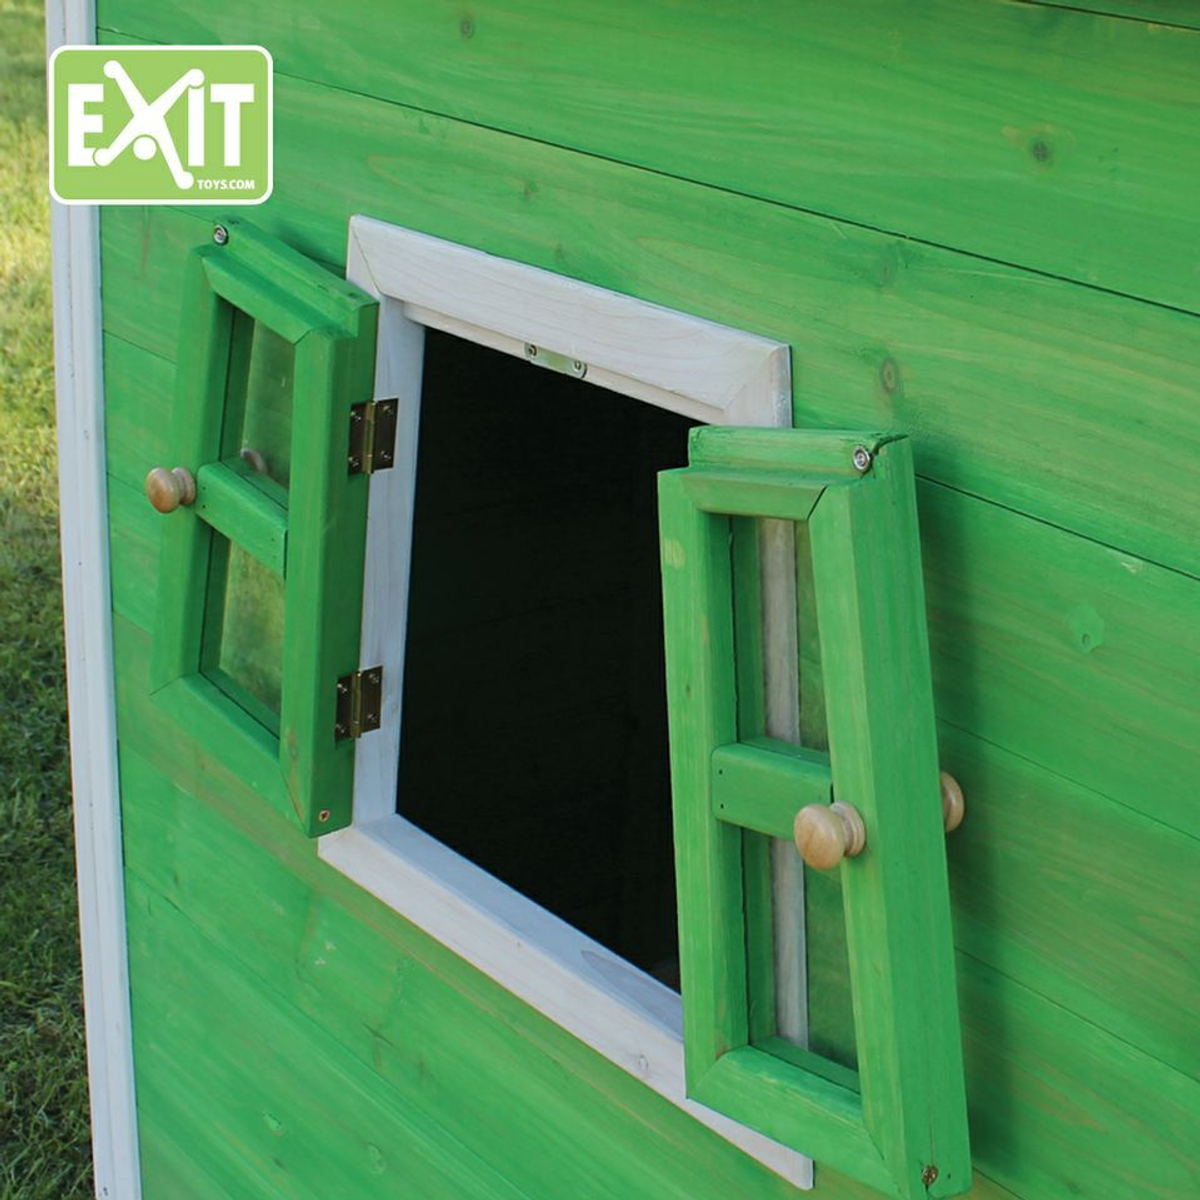 Exit Fantasia 300 Speelhuisje - Groen